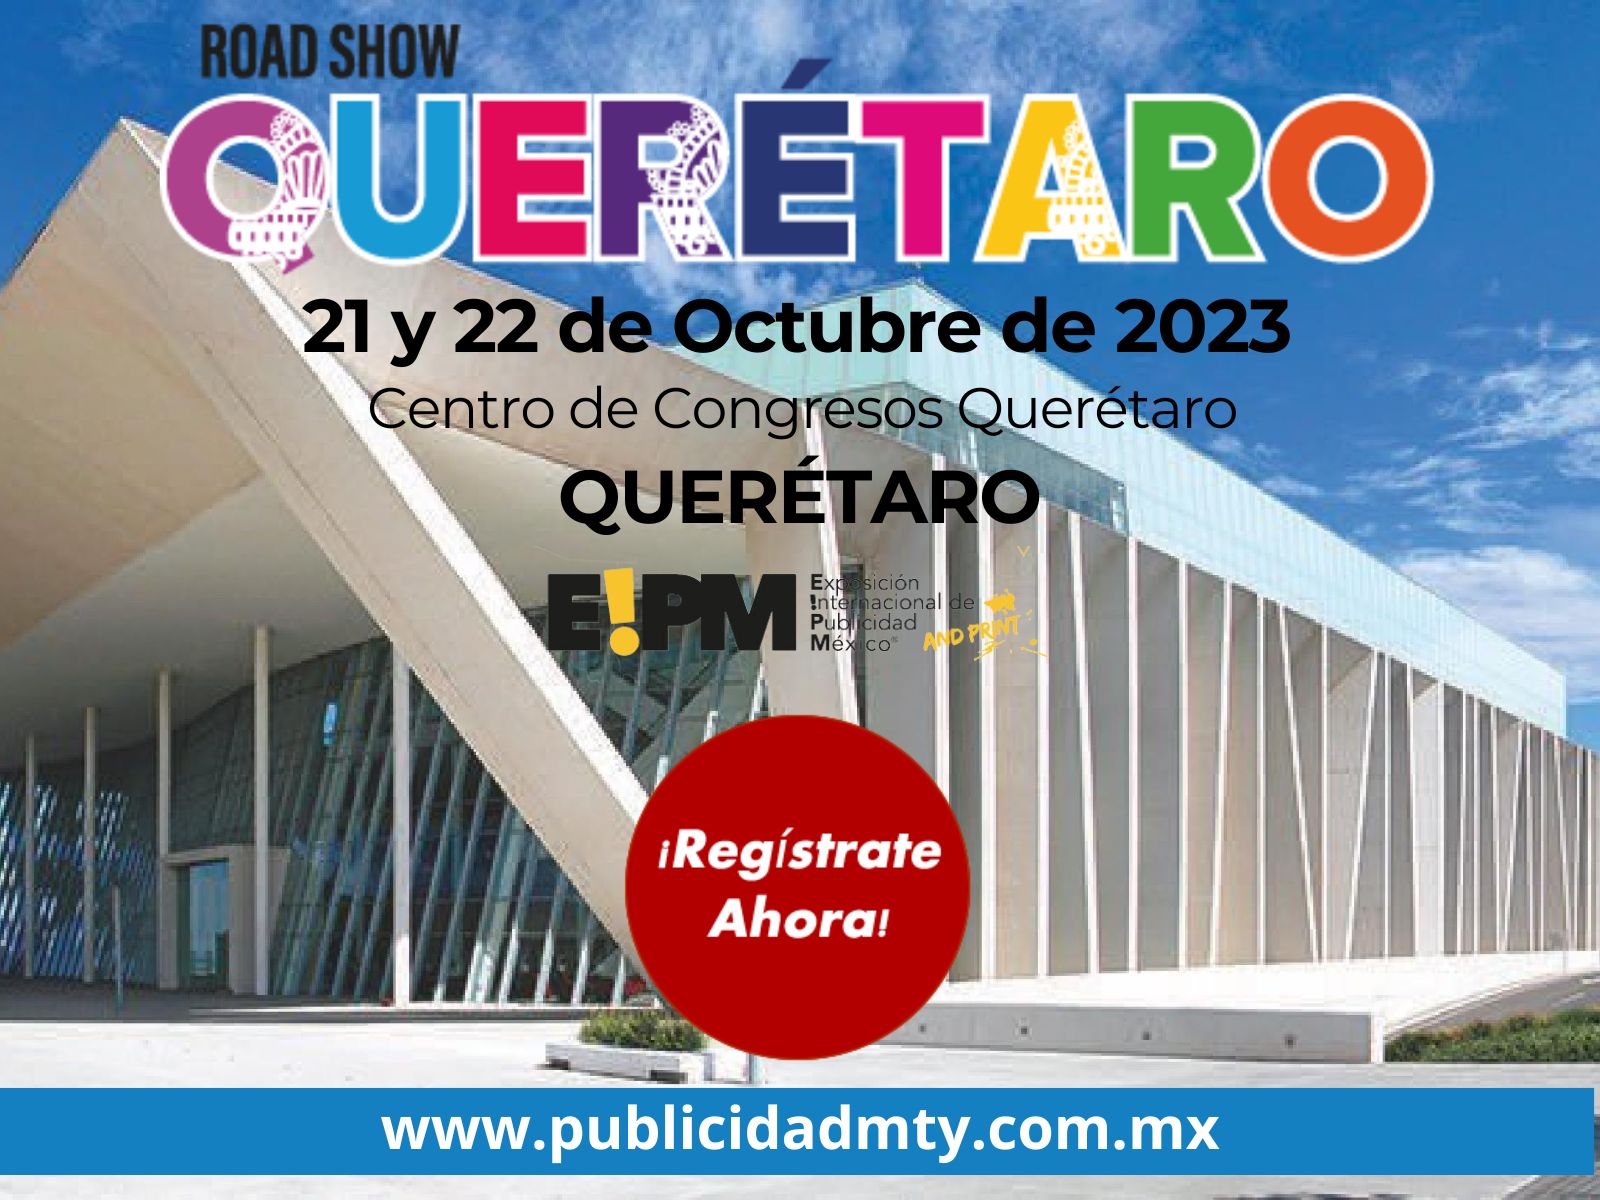 EXPO RoadShow Publicidad Querétaro 2023